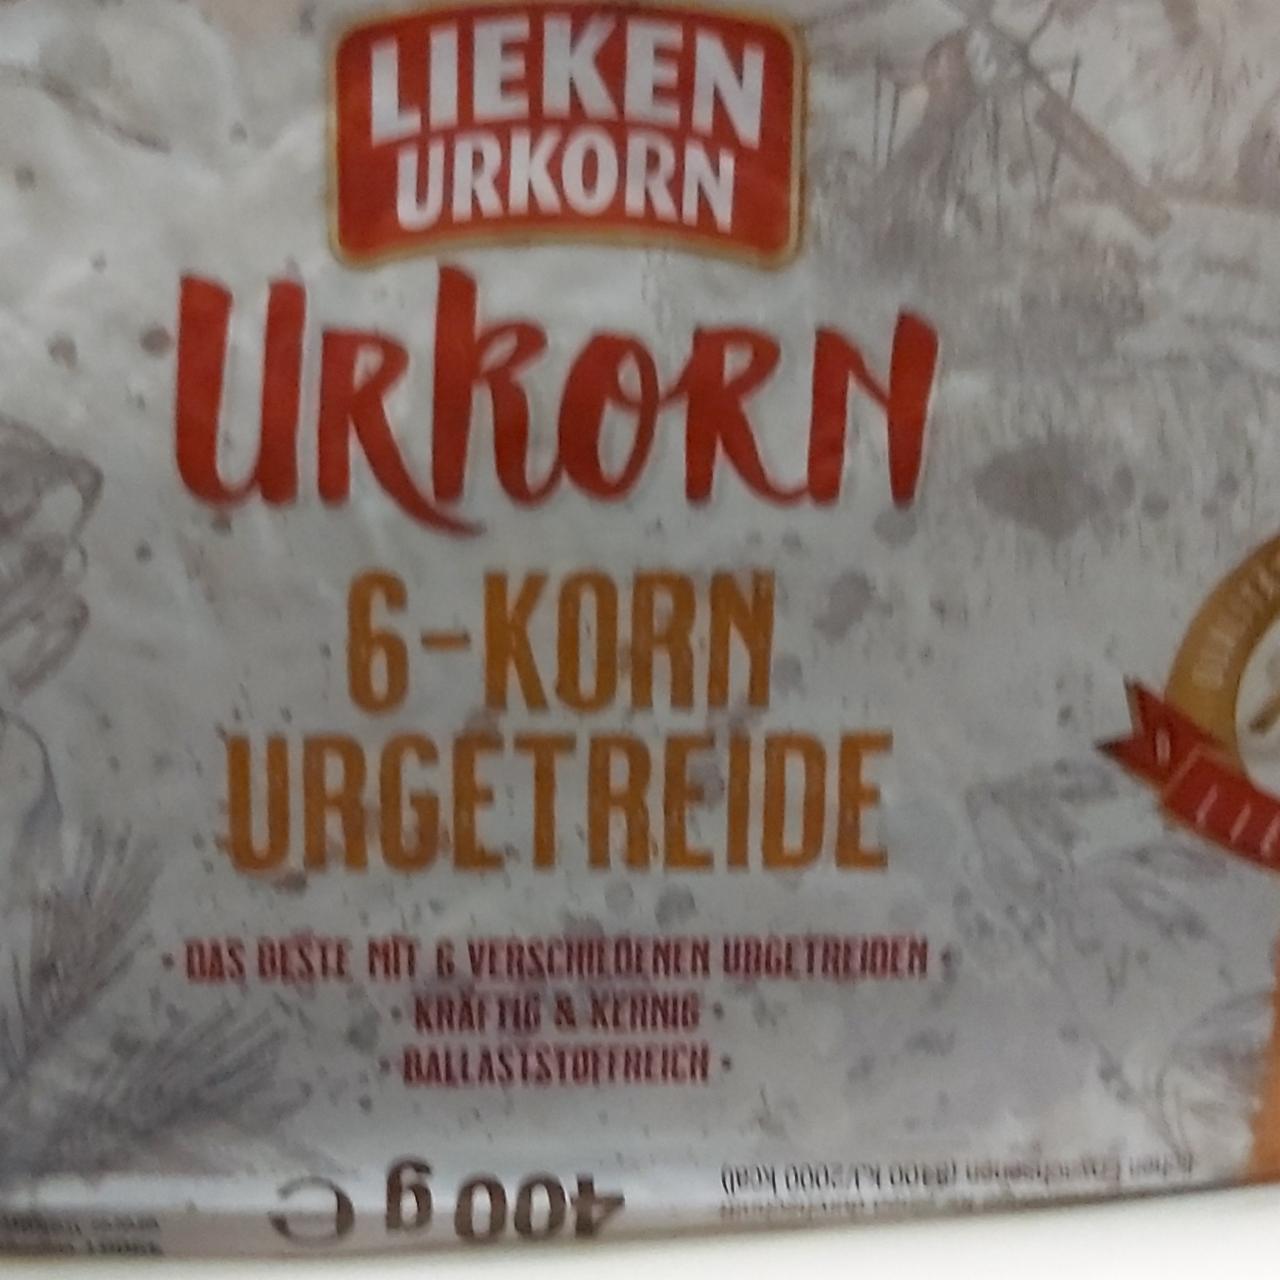 Fotografie - 6-Korn Urgetreide Lieken Urkorn